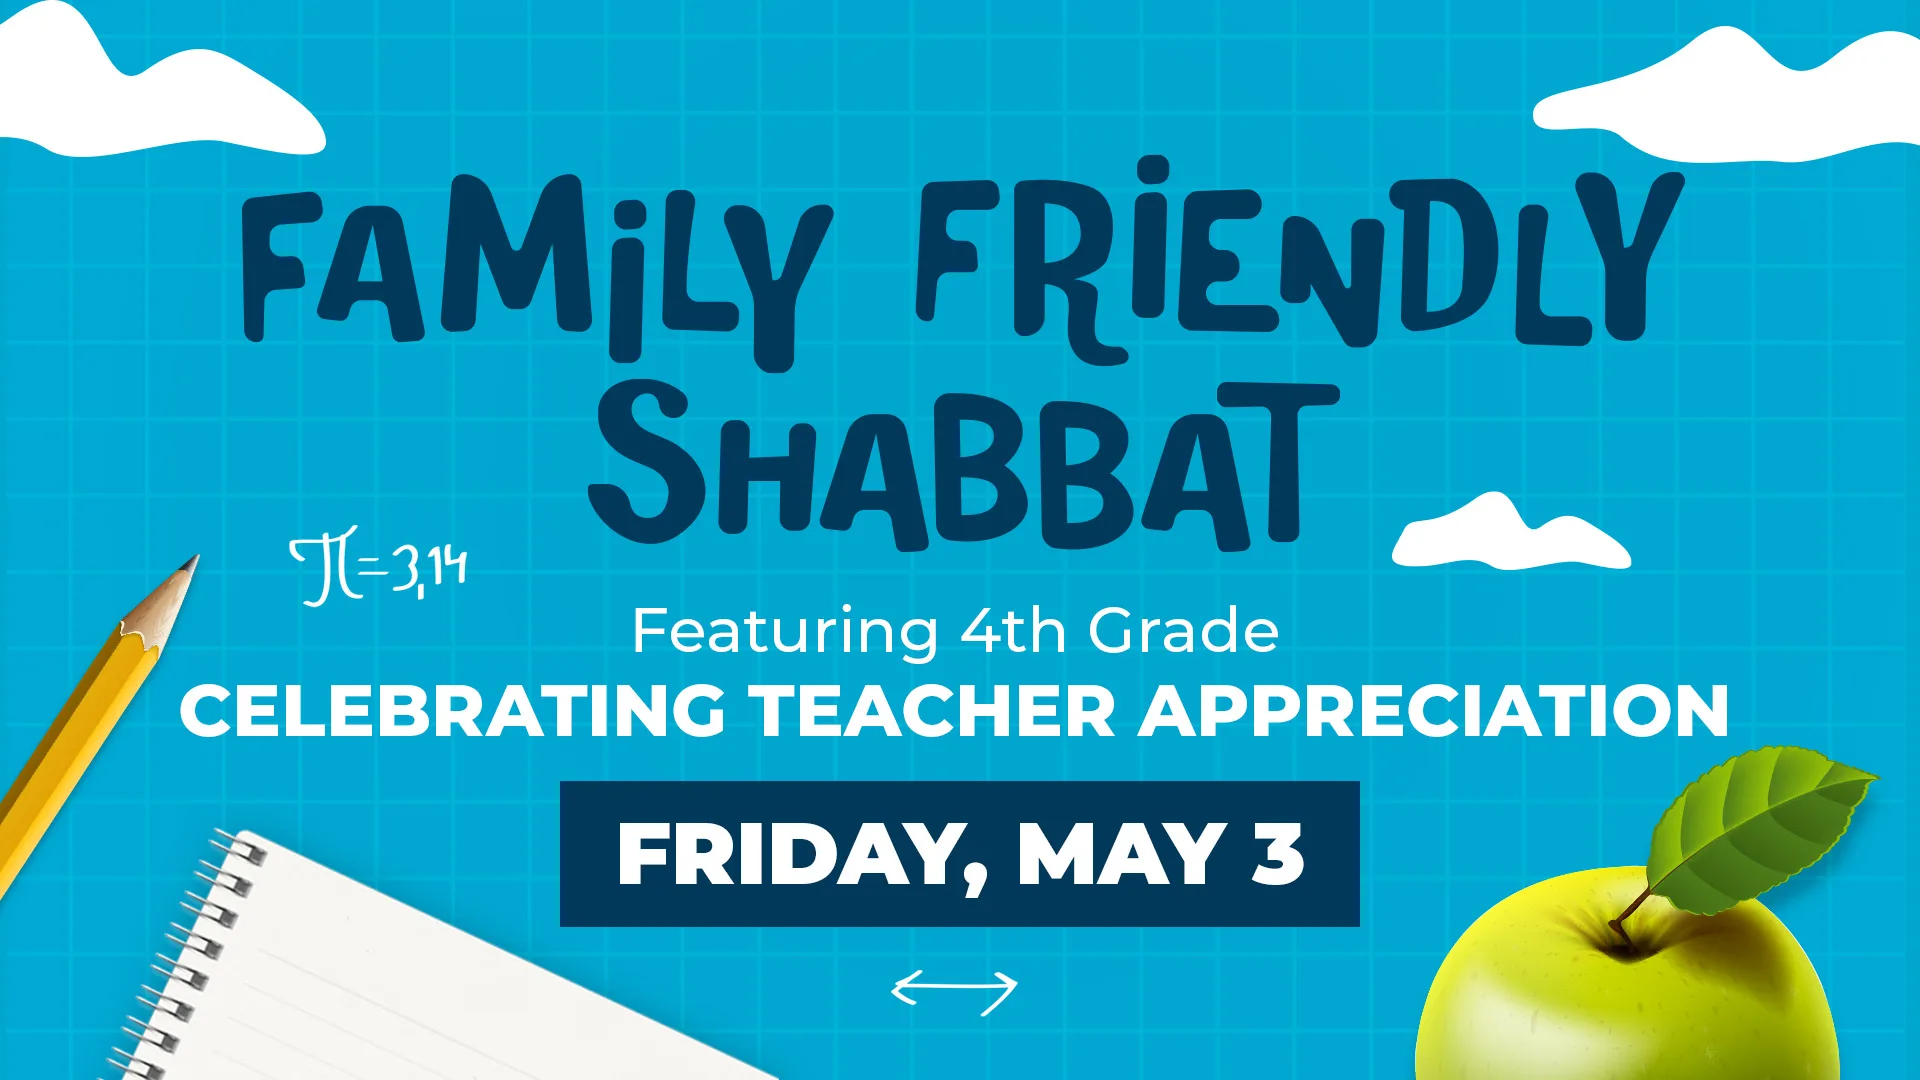 Family Friendly Shabbat Featuring 4th Grade and Teacher Appreciation